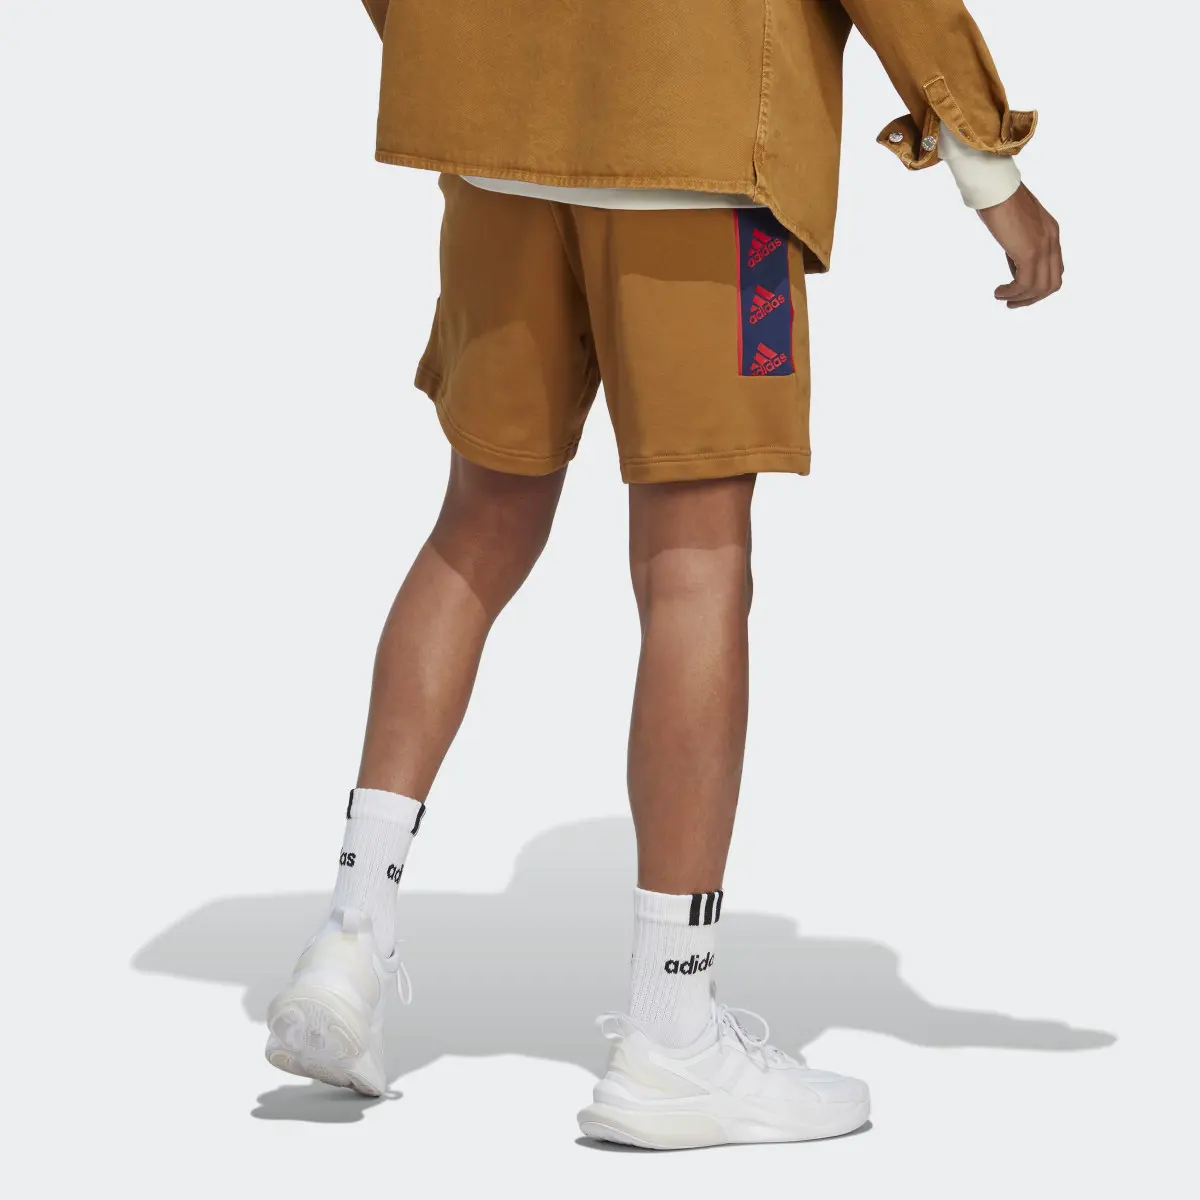 Adidas Brandlove Shorts. 2